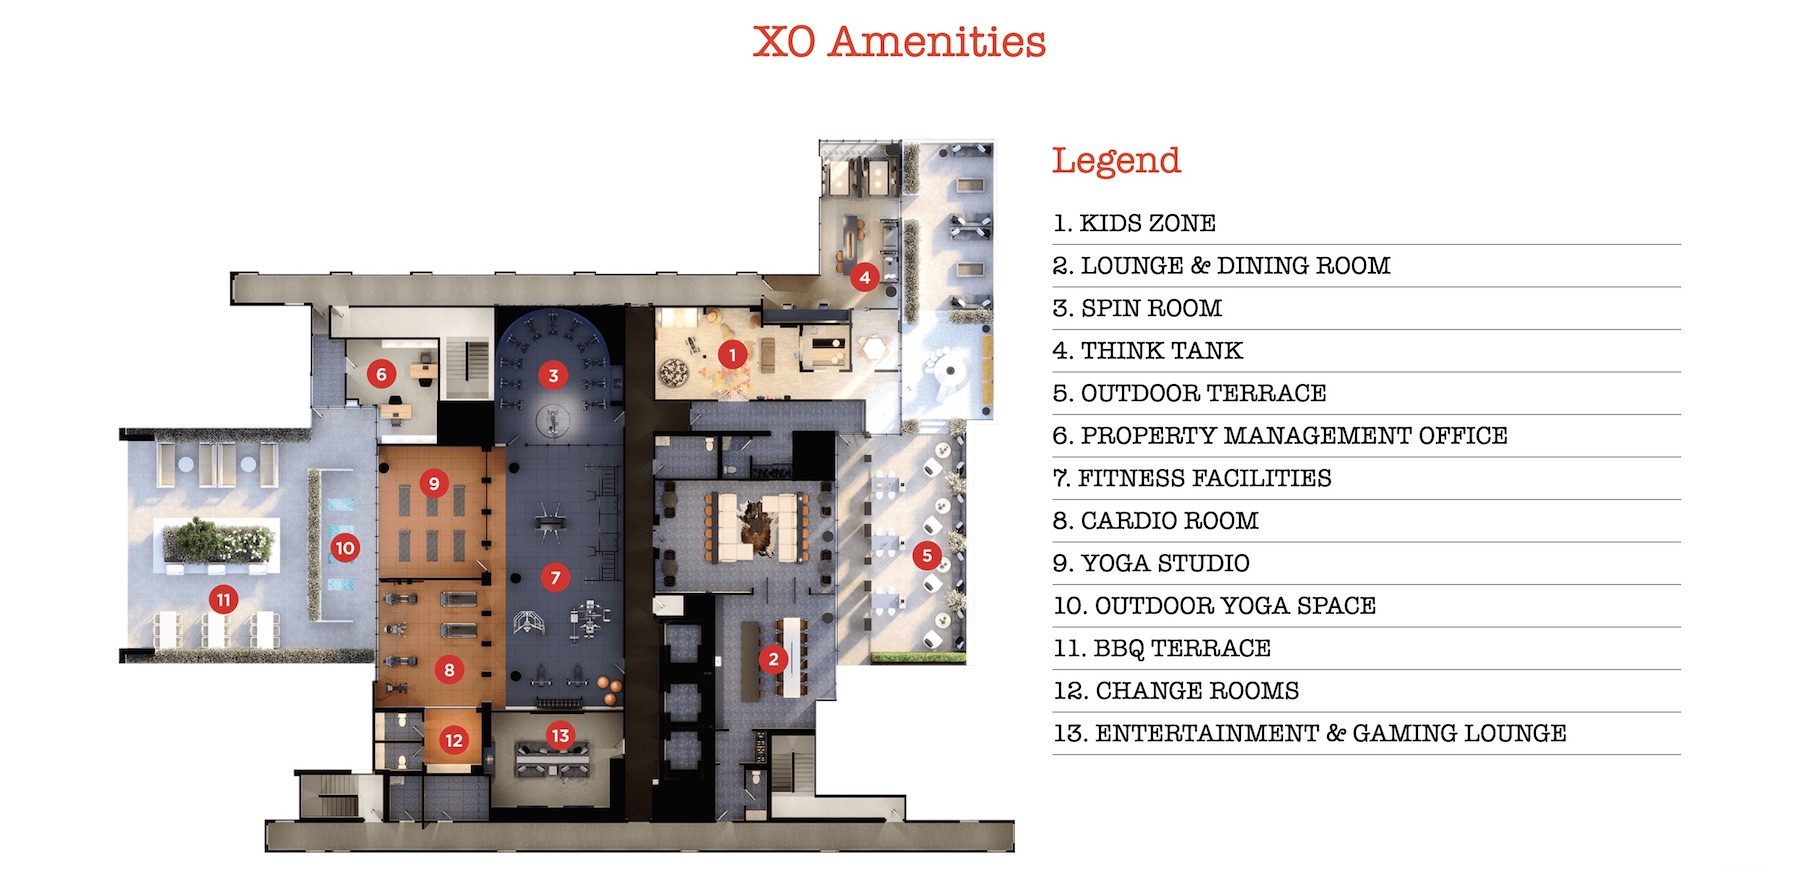 XO Condos amenities list with diagram.